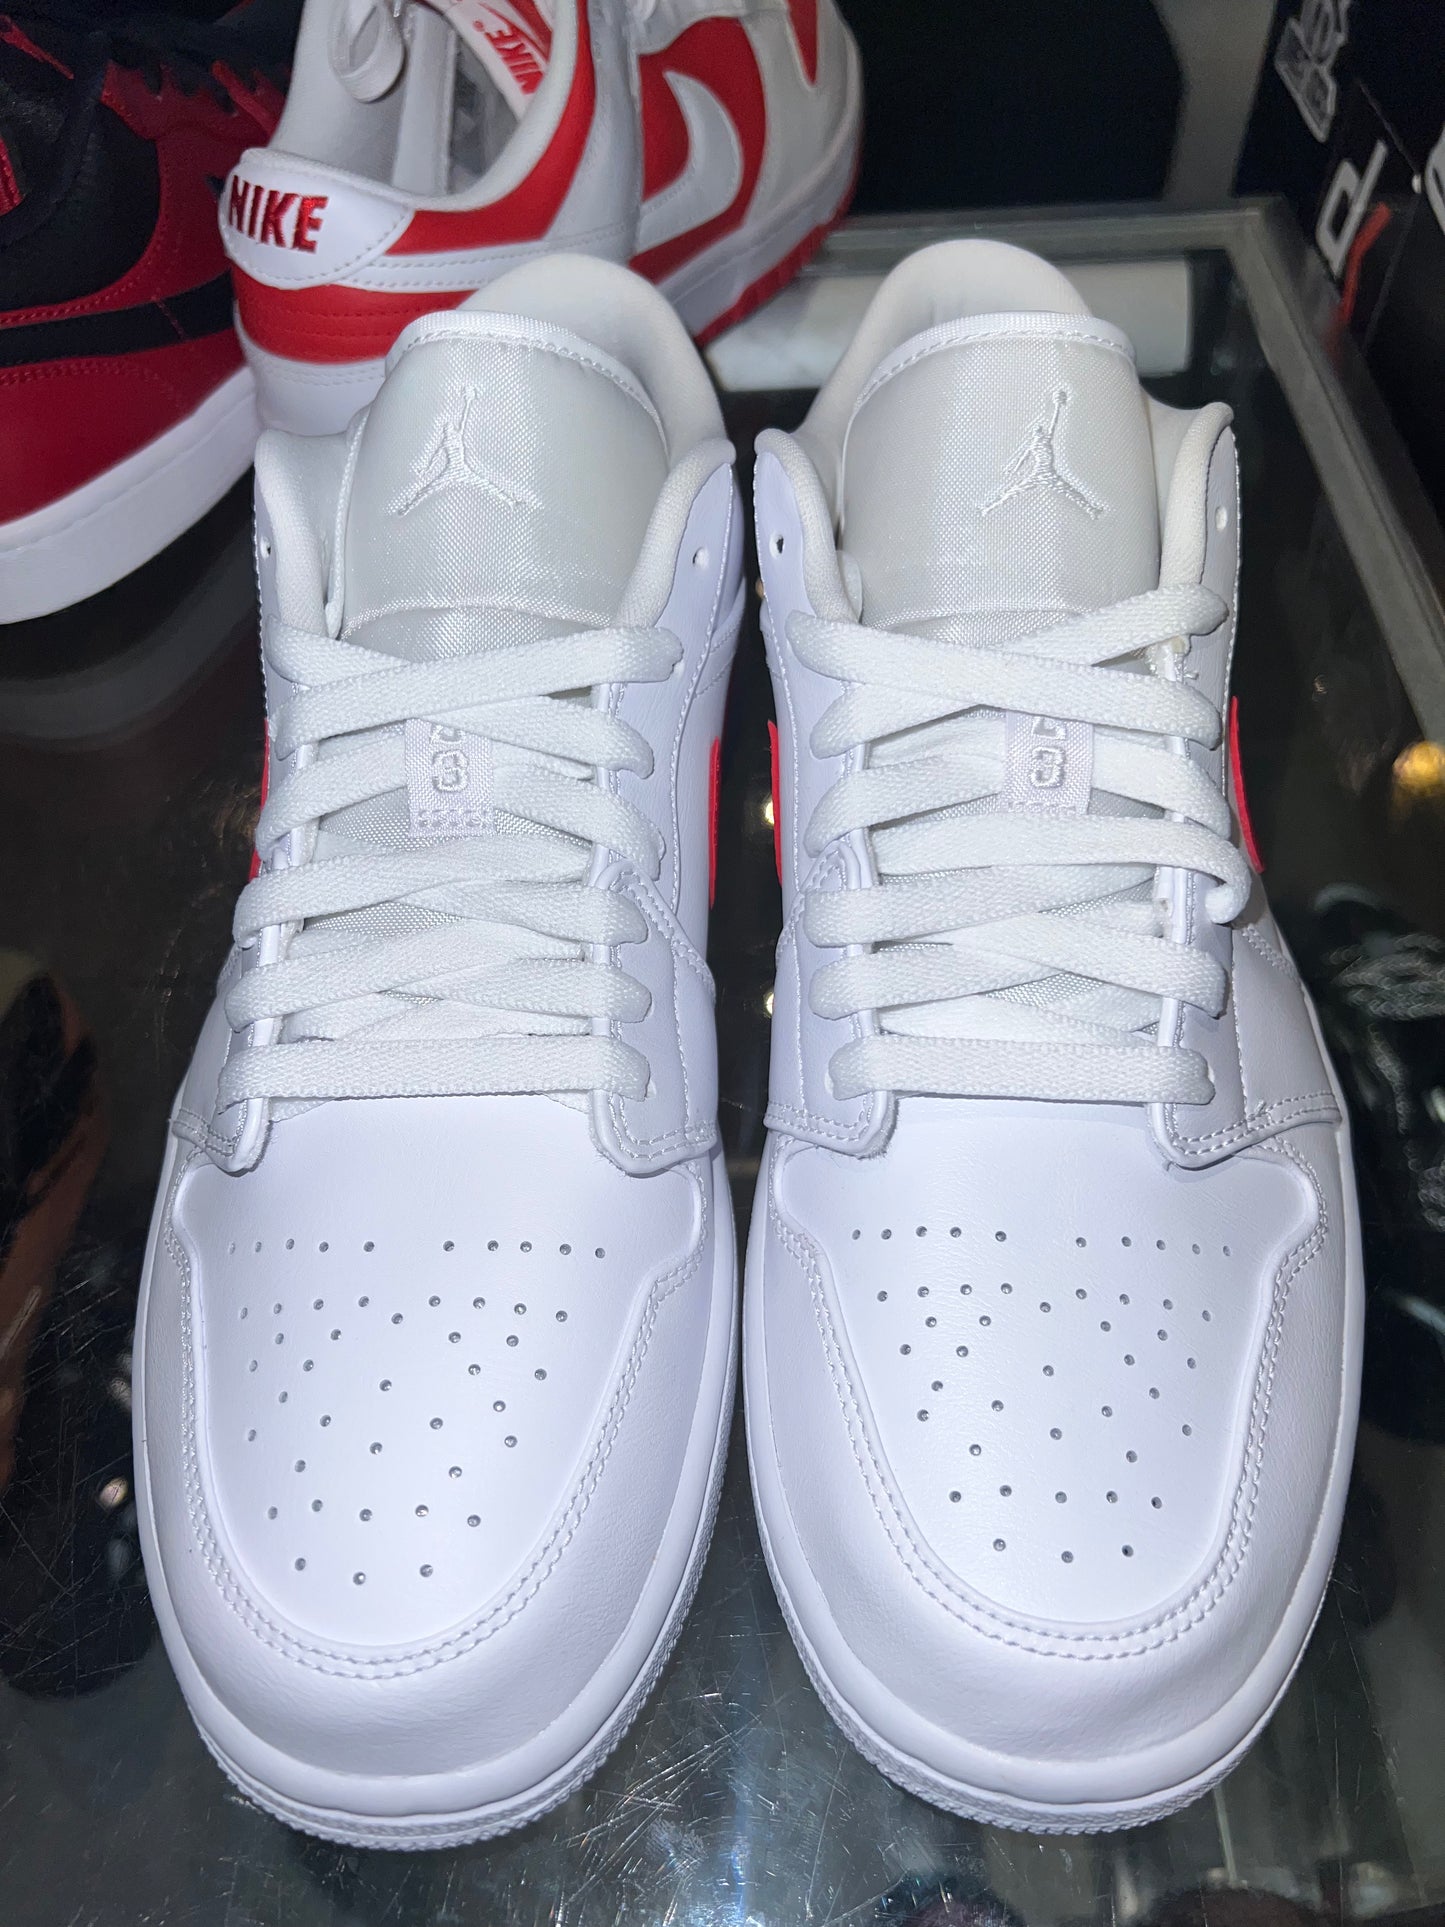 Size 9 (10.5W) Air Jordan 1 Low “White University Red” Brand New (Mall)